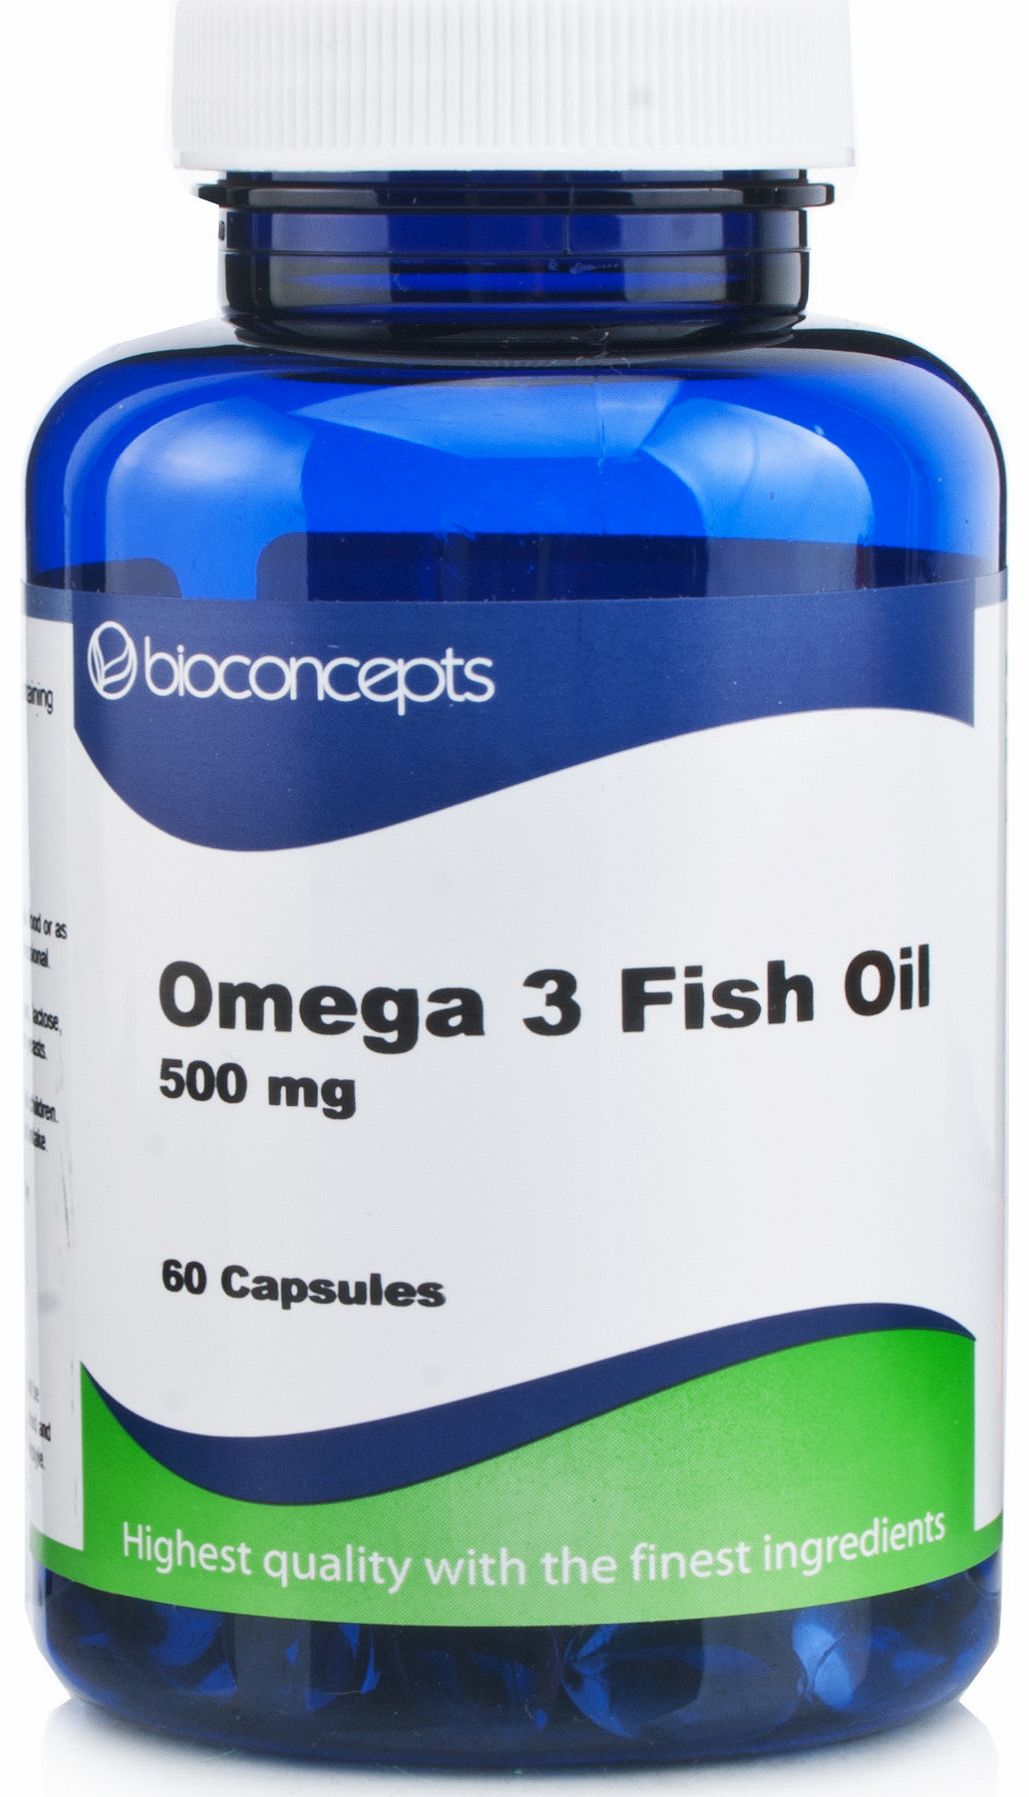 Bioconcepts Omega 3 Fish Oil 500mg